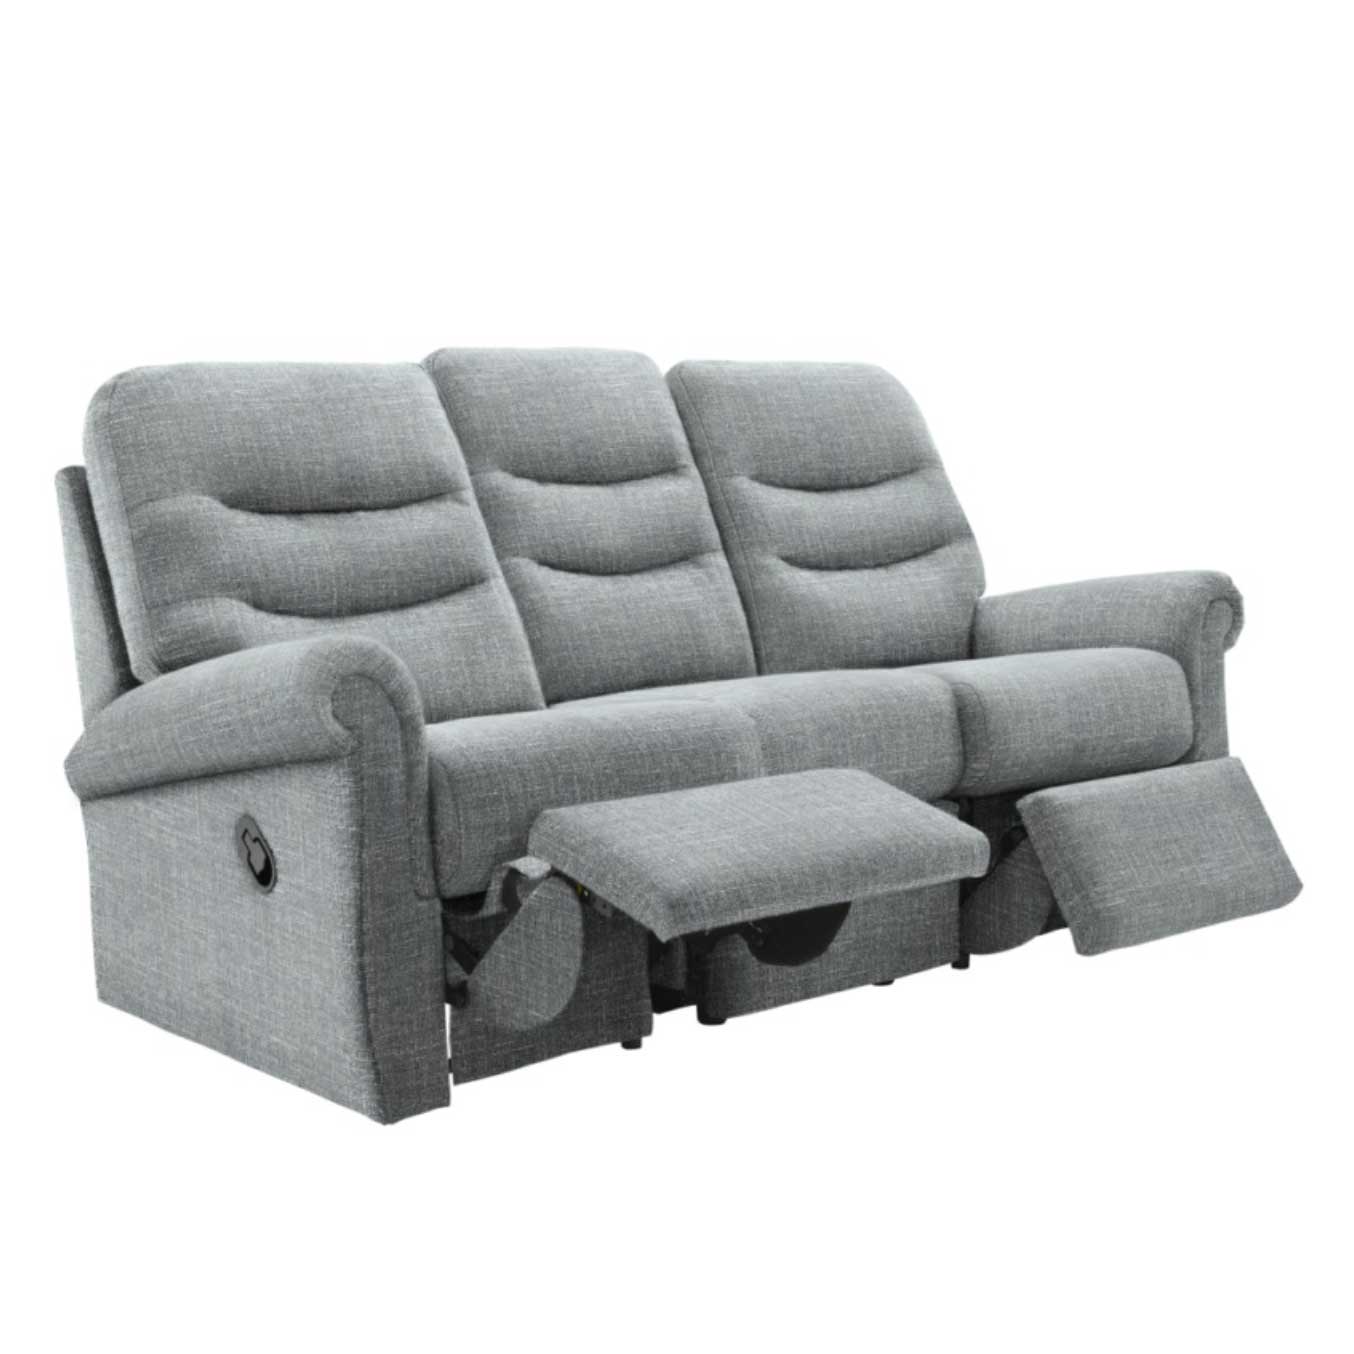 G Plan Holmes 3 Seater Sofa